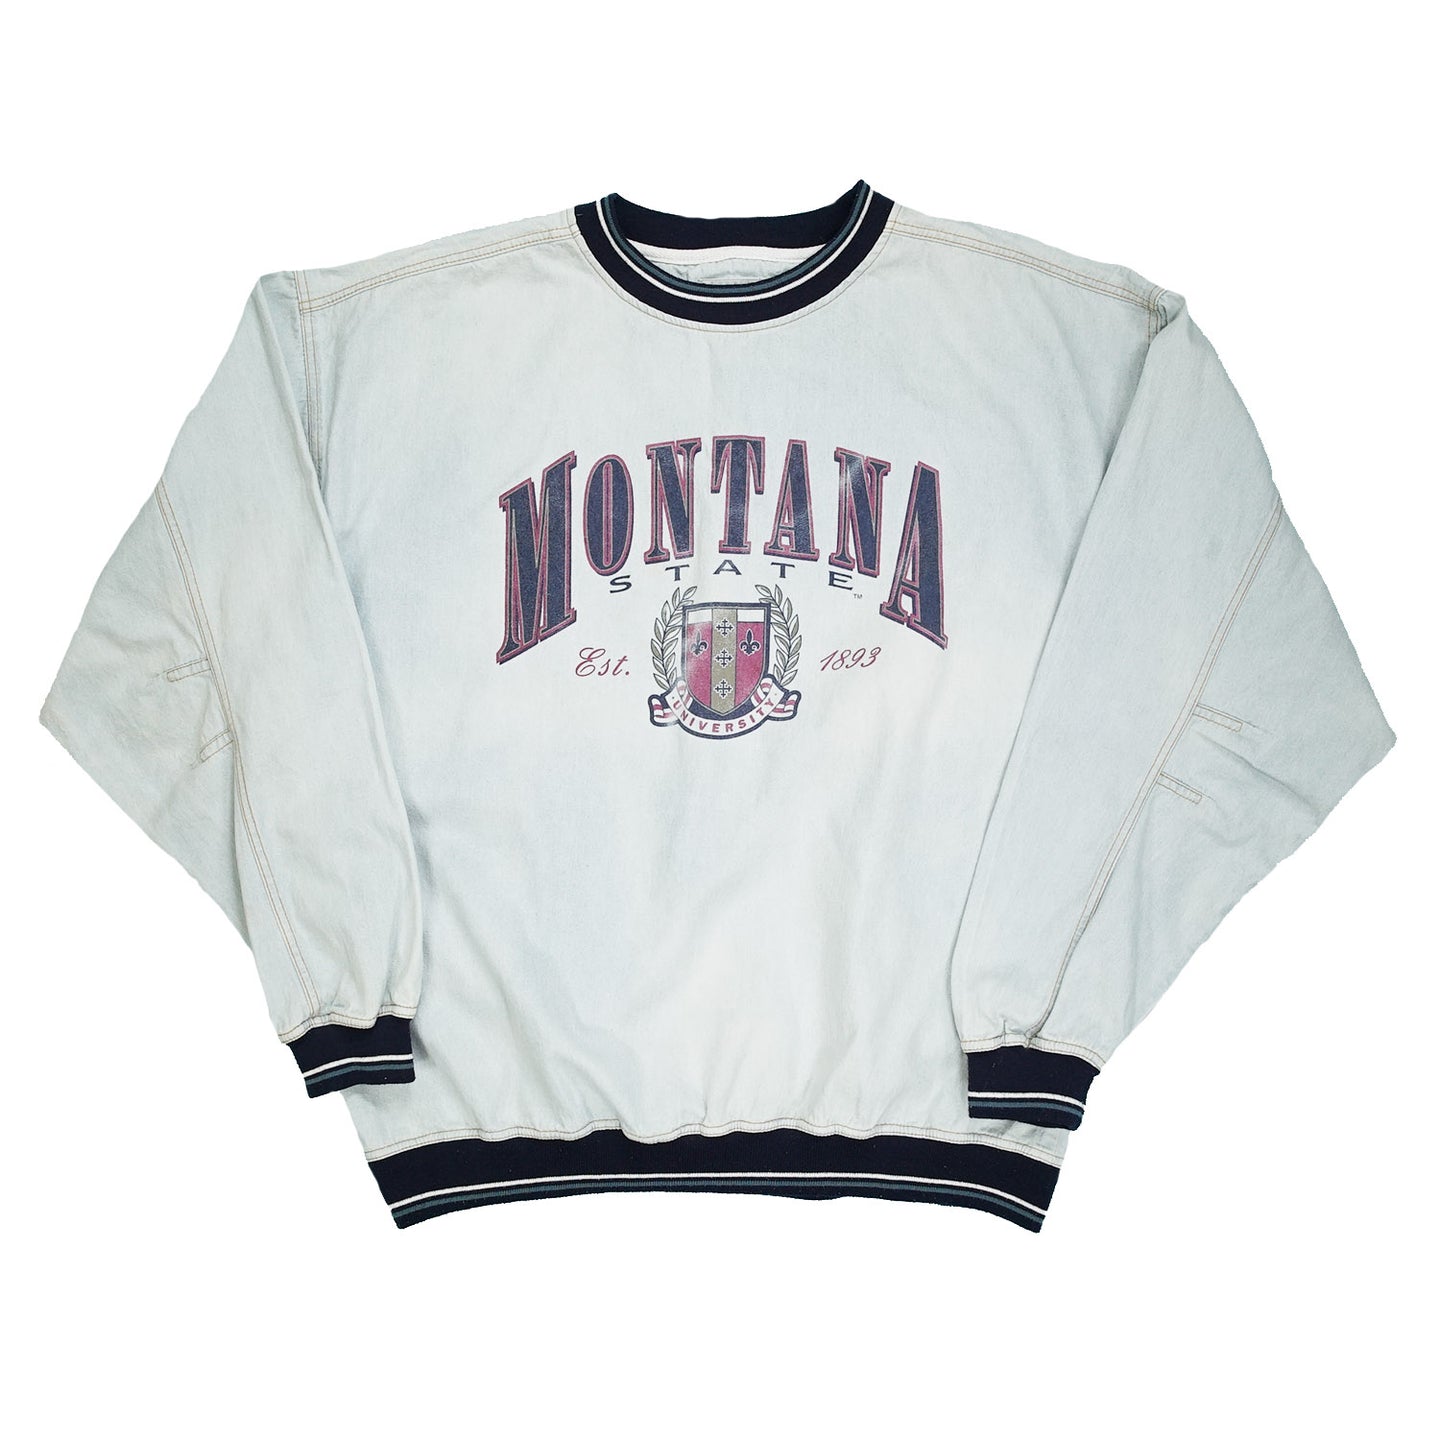 Vintage Montana State denim crewneck XL